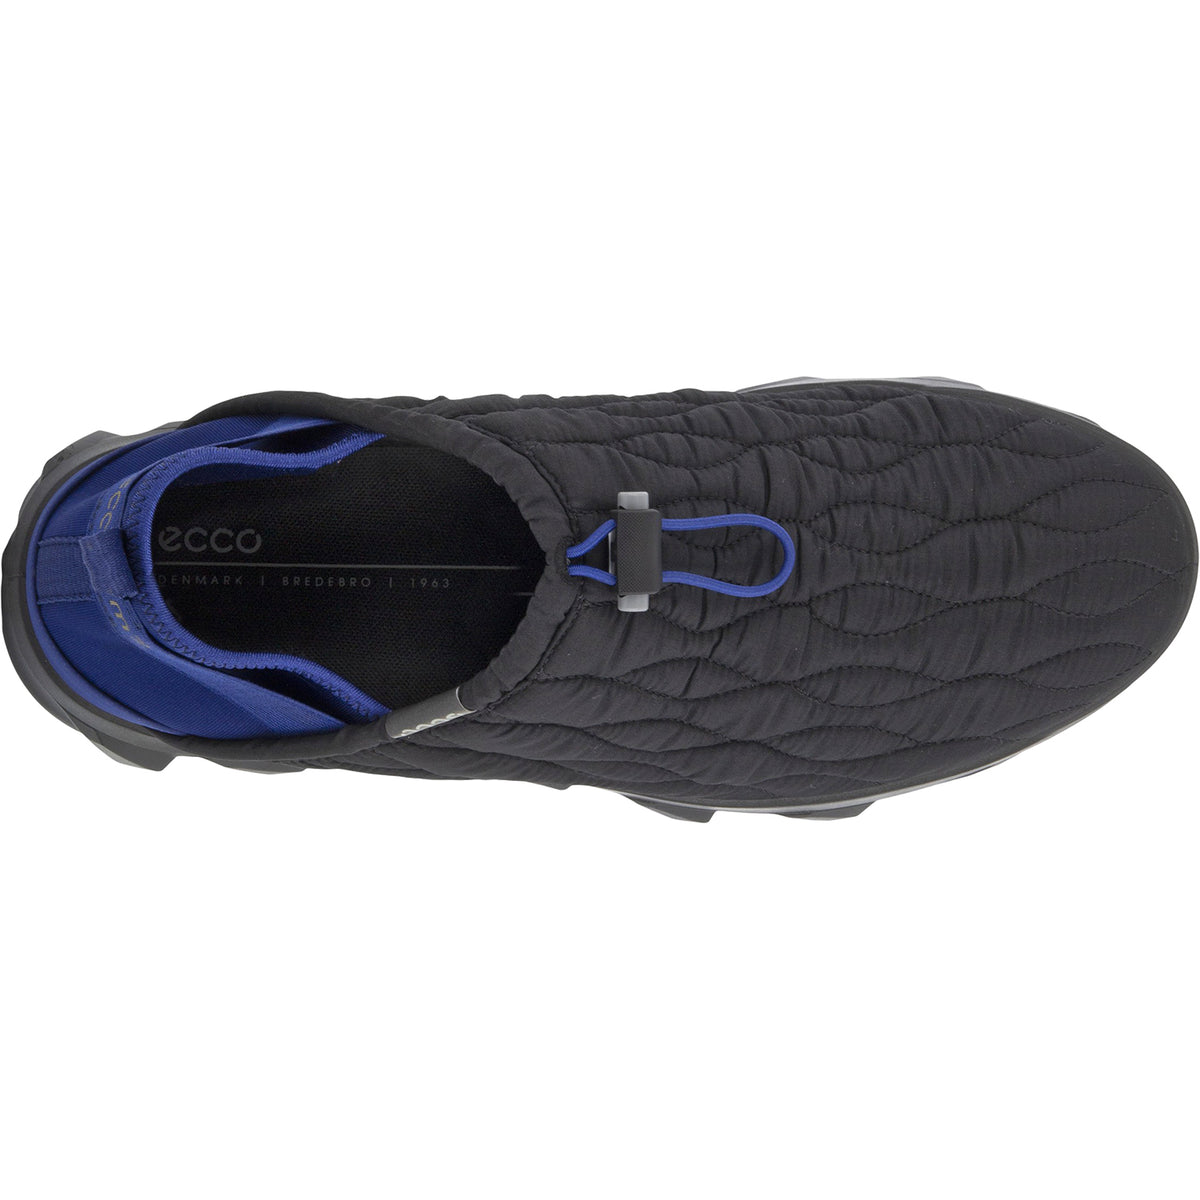 Ecco MX Q-Slip | Men's Slippers | Footwear etc.